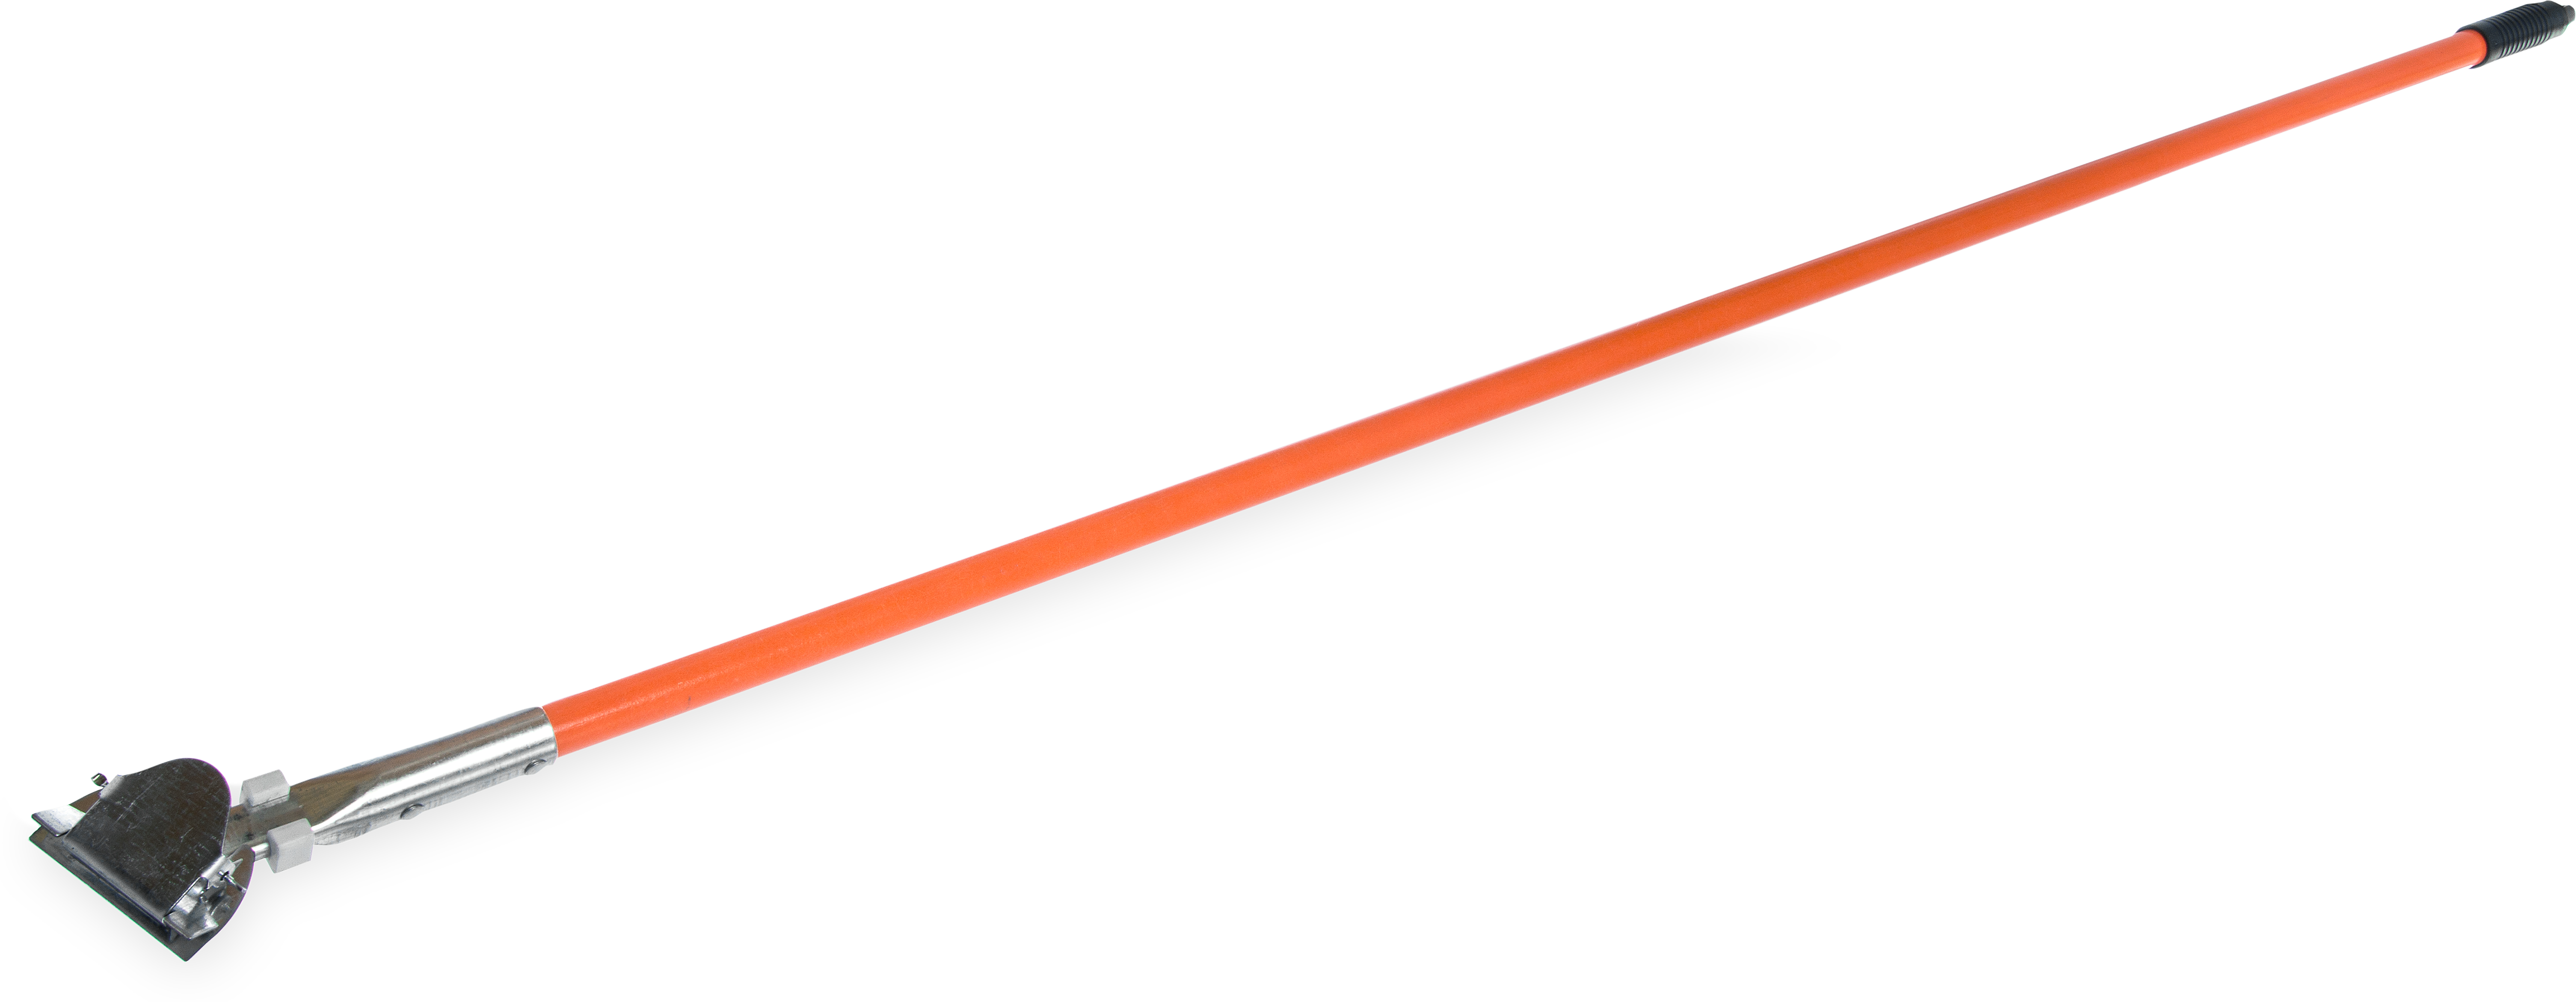 Fiberglass Dust Mop Handle with Clip-On Connector 60 - Orange